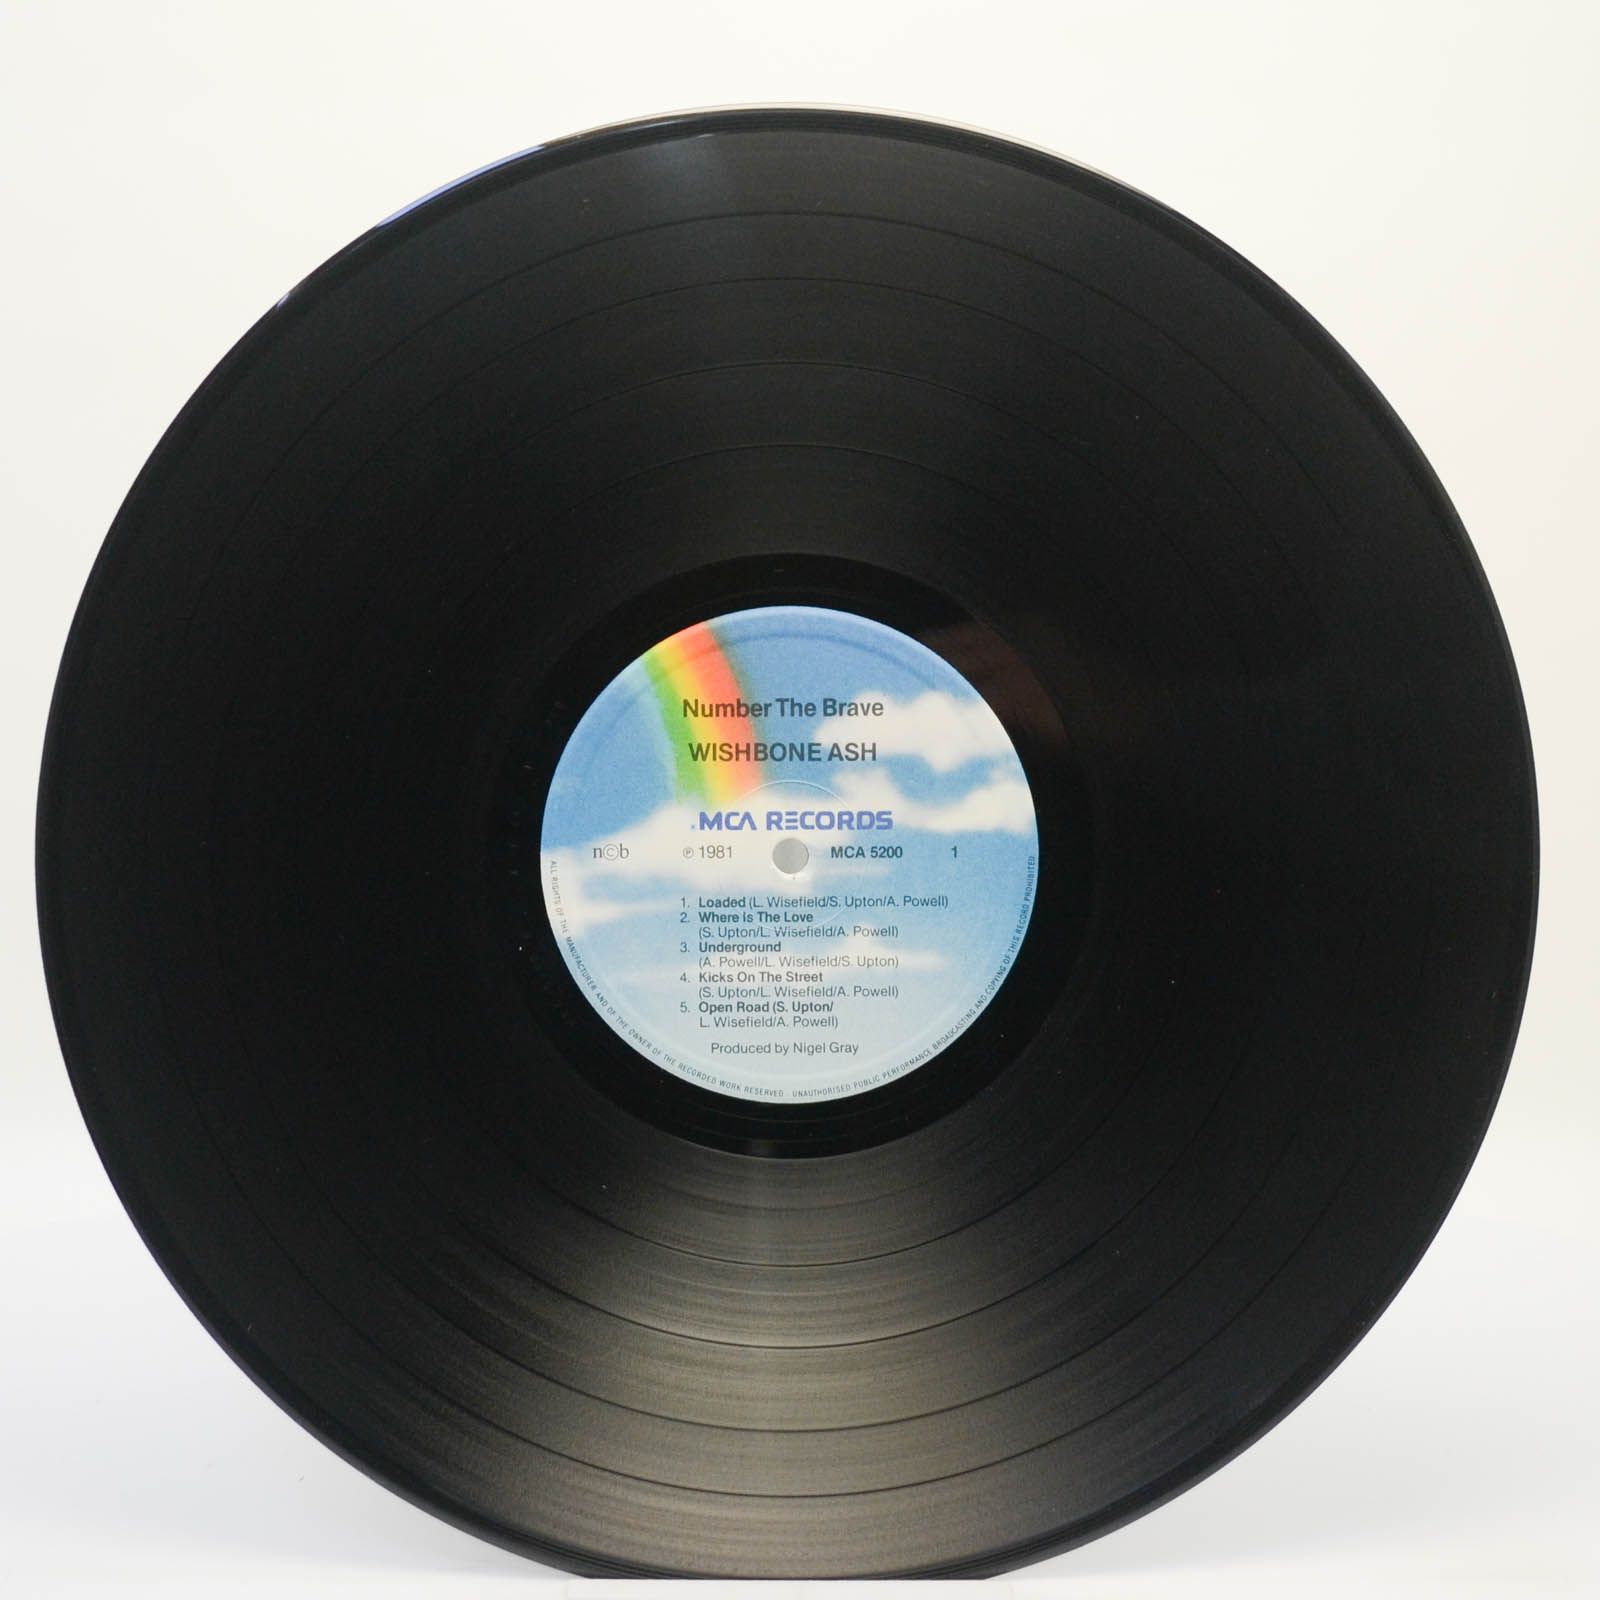 Wishbone Ash — Number The Brave, 1981